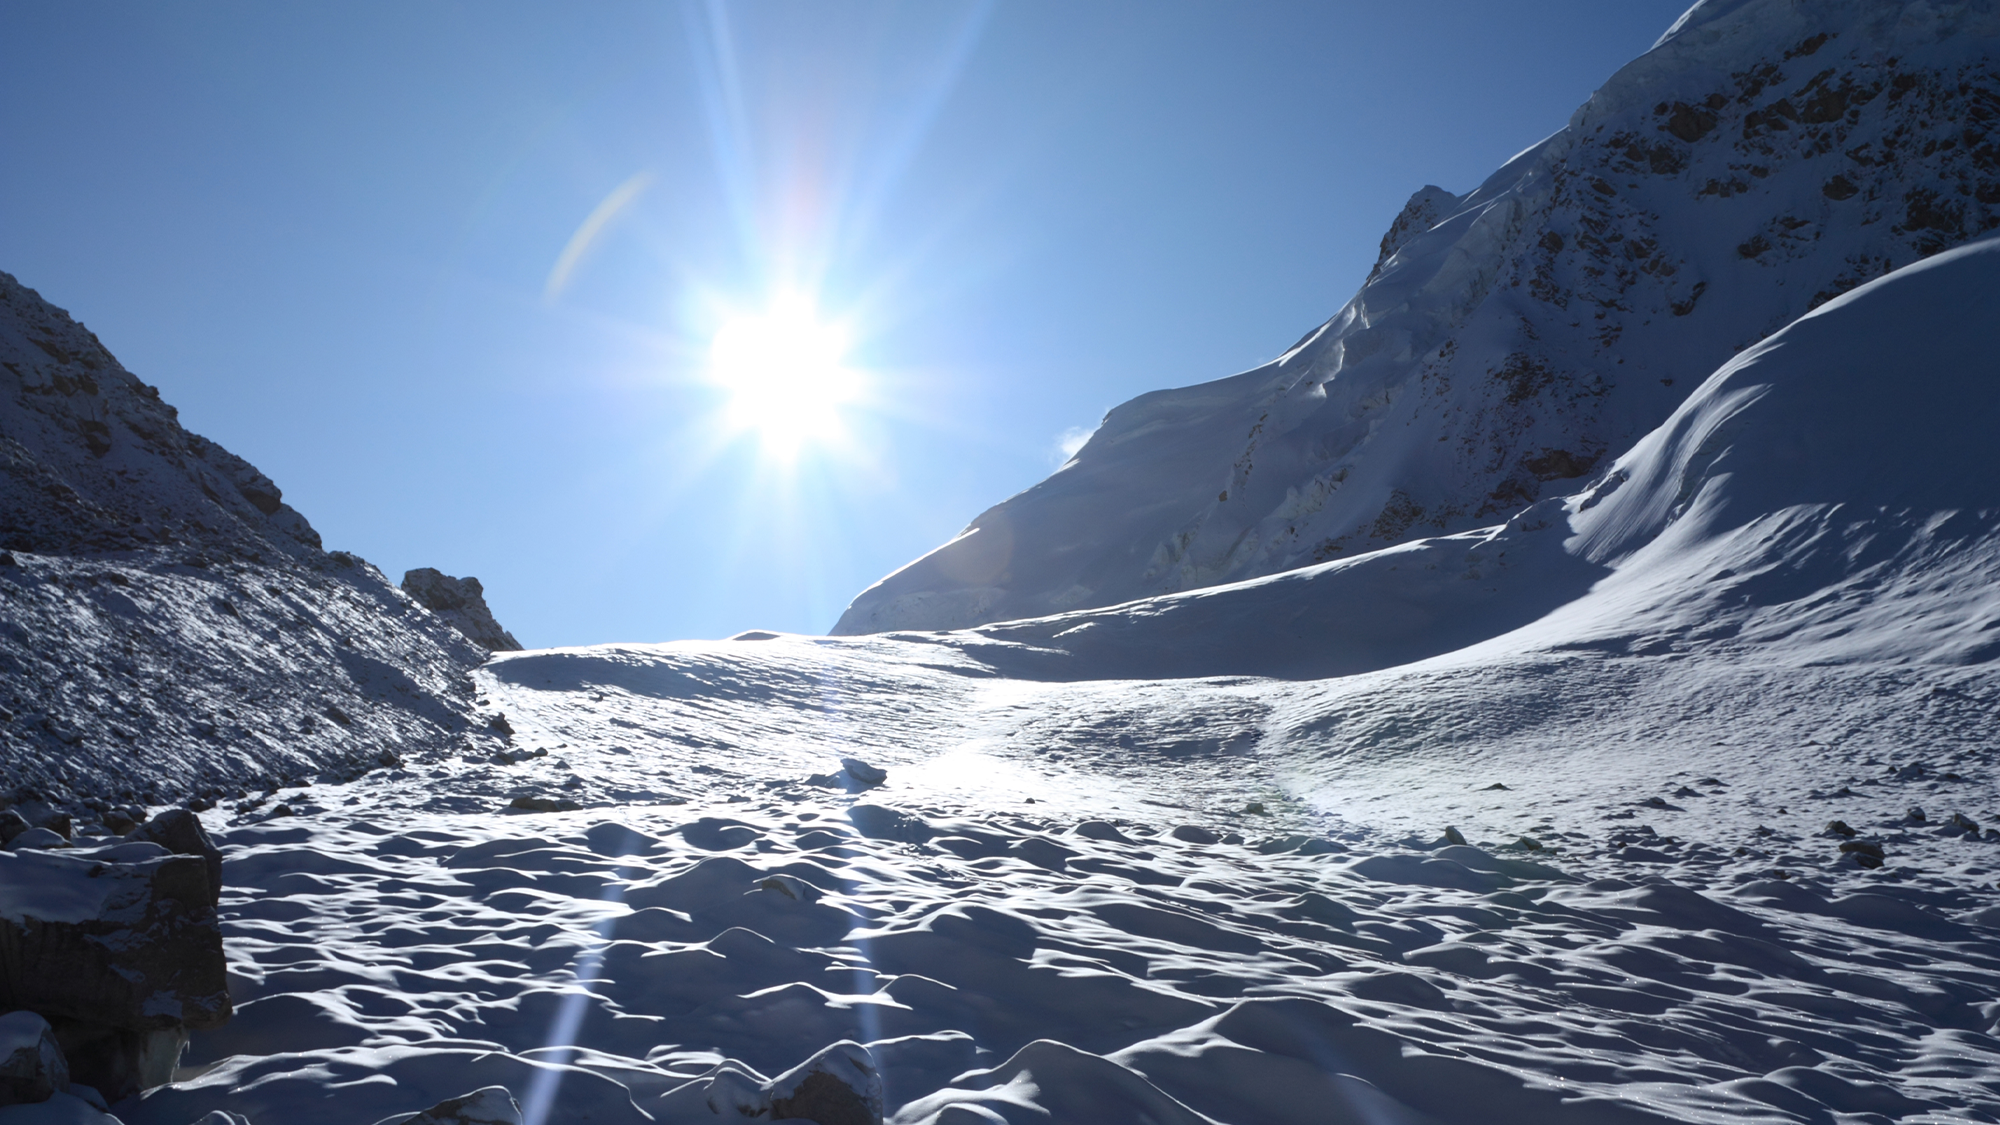 The sun shining on glaciers.